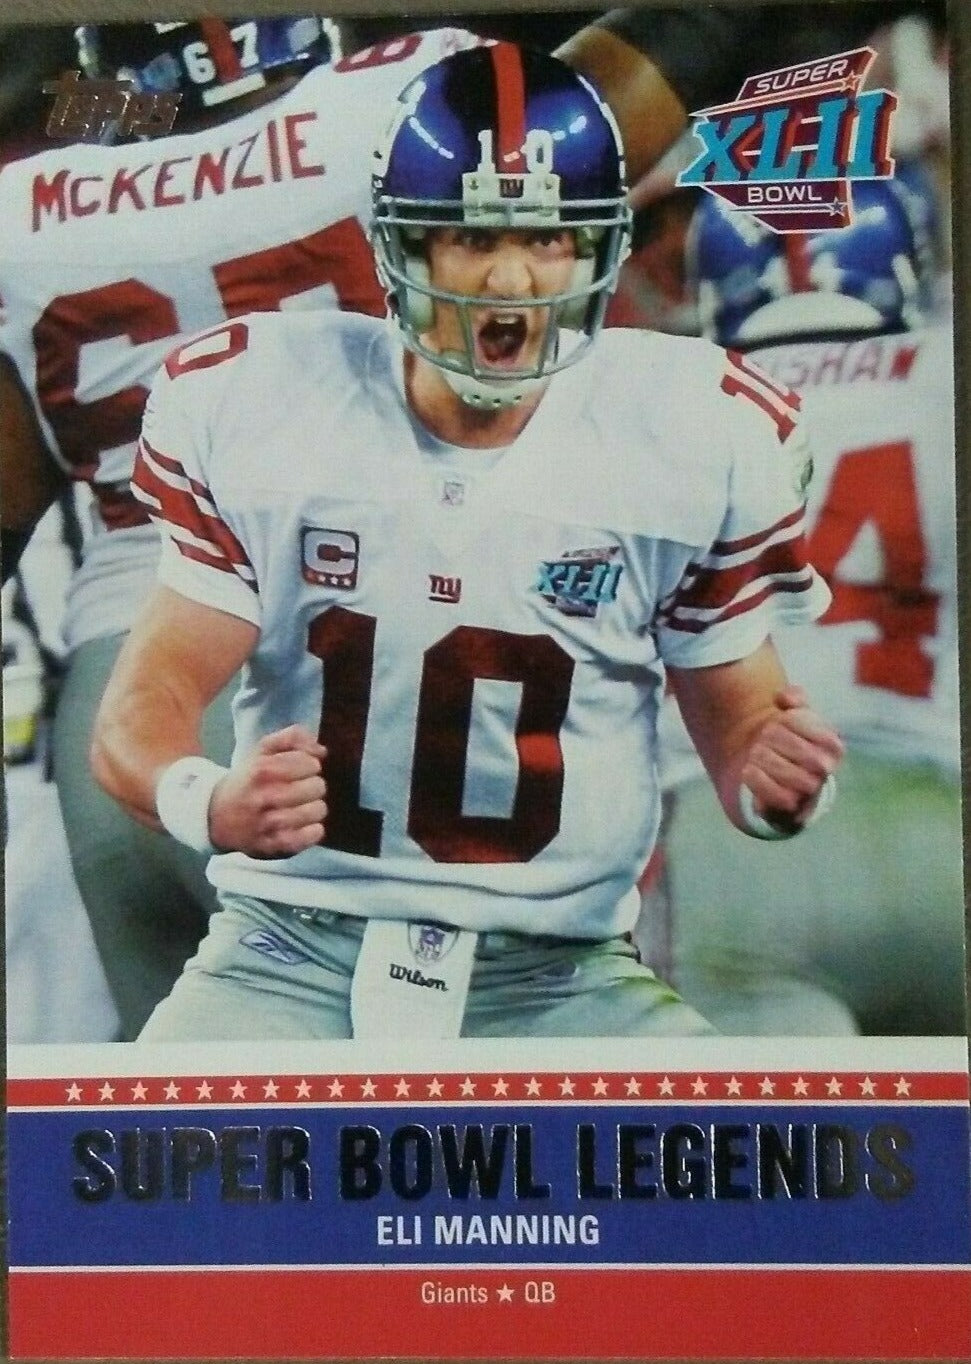 Eli Manning 2011 Topps Super Bowl Legends Series Mint Card #SBLXLII